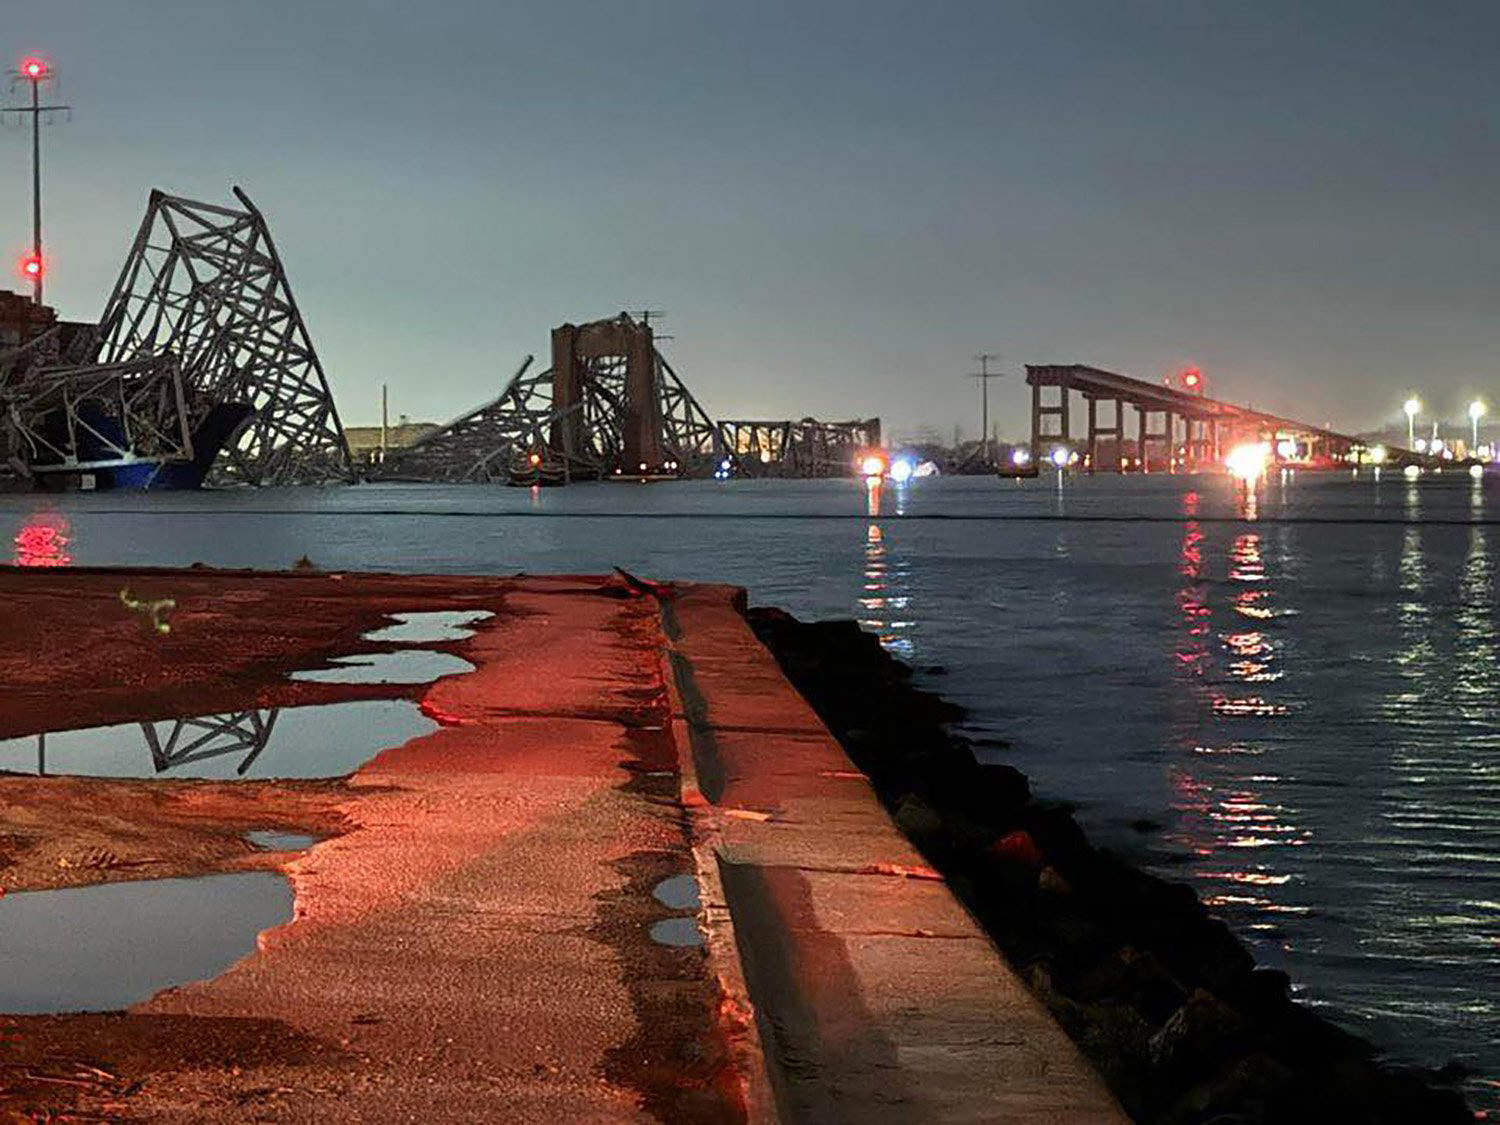 6 workers presumed dead after cargo ship crash destroys Baltimore bridge